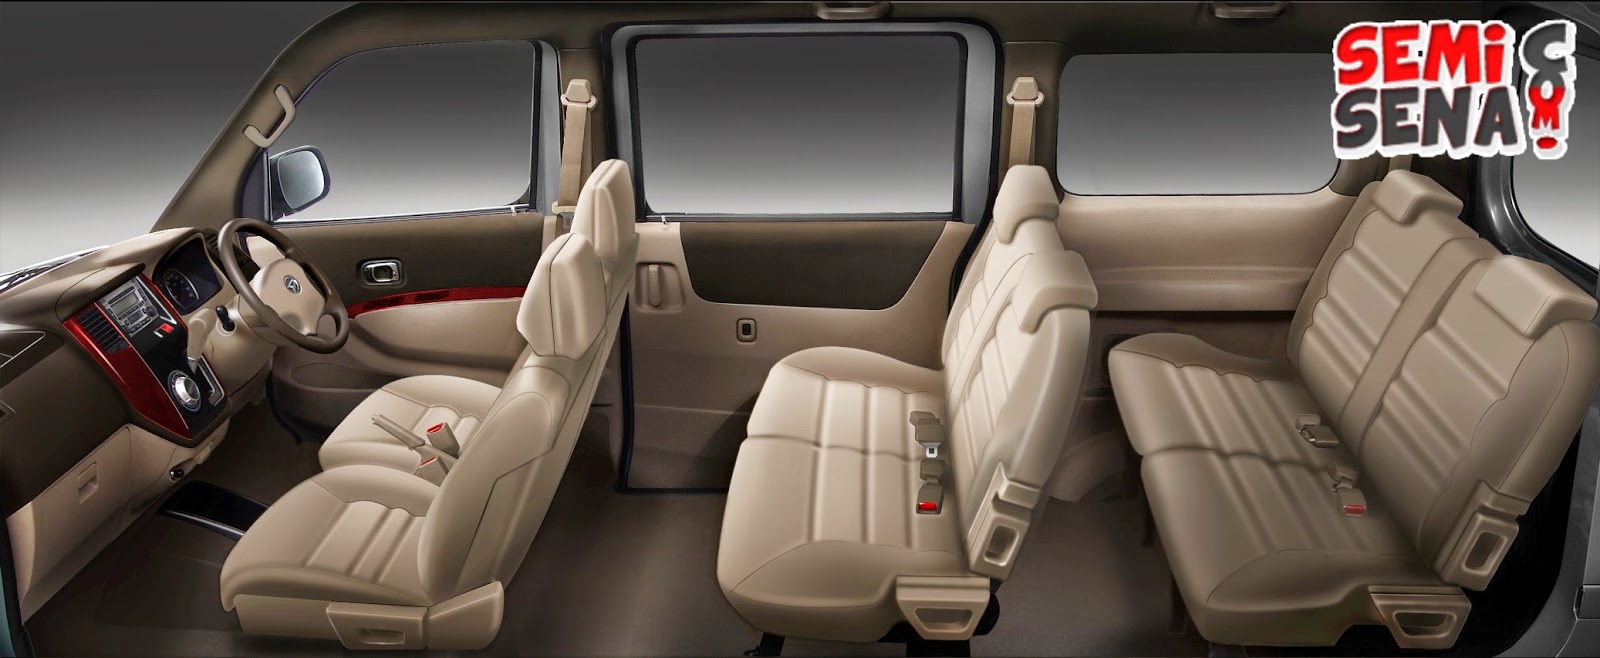 Specifications and Price Daihatsu Luxio 